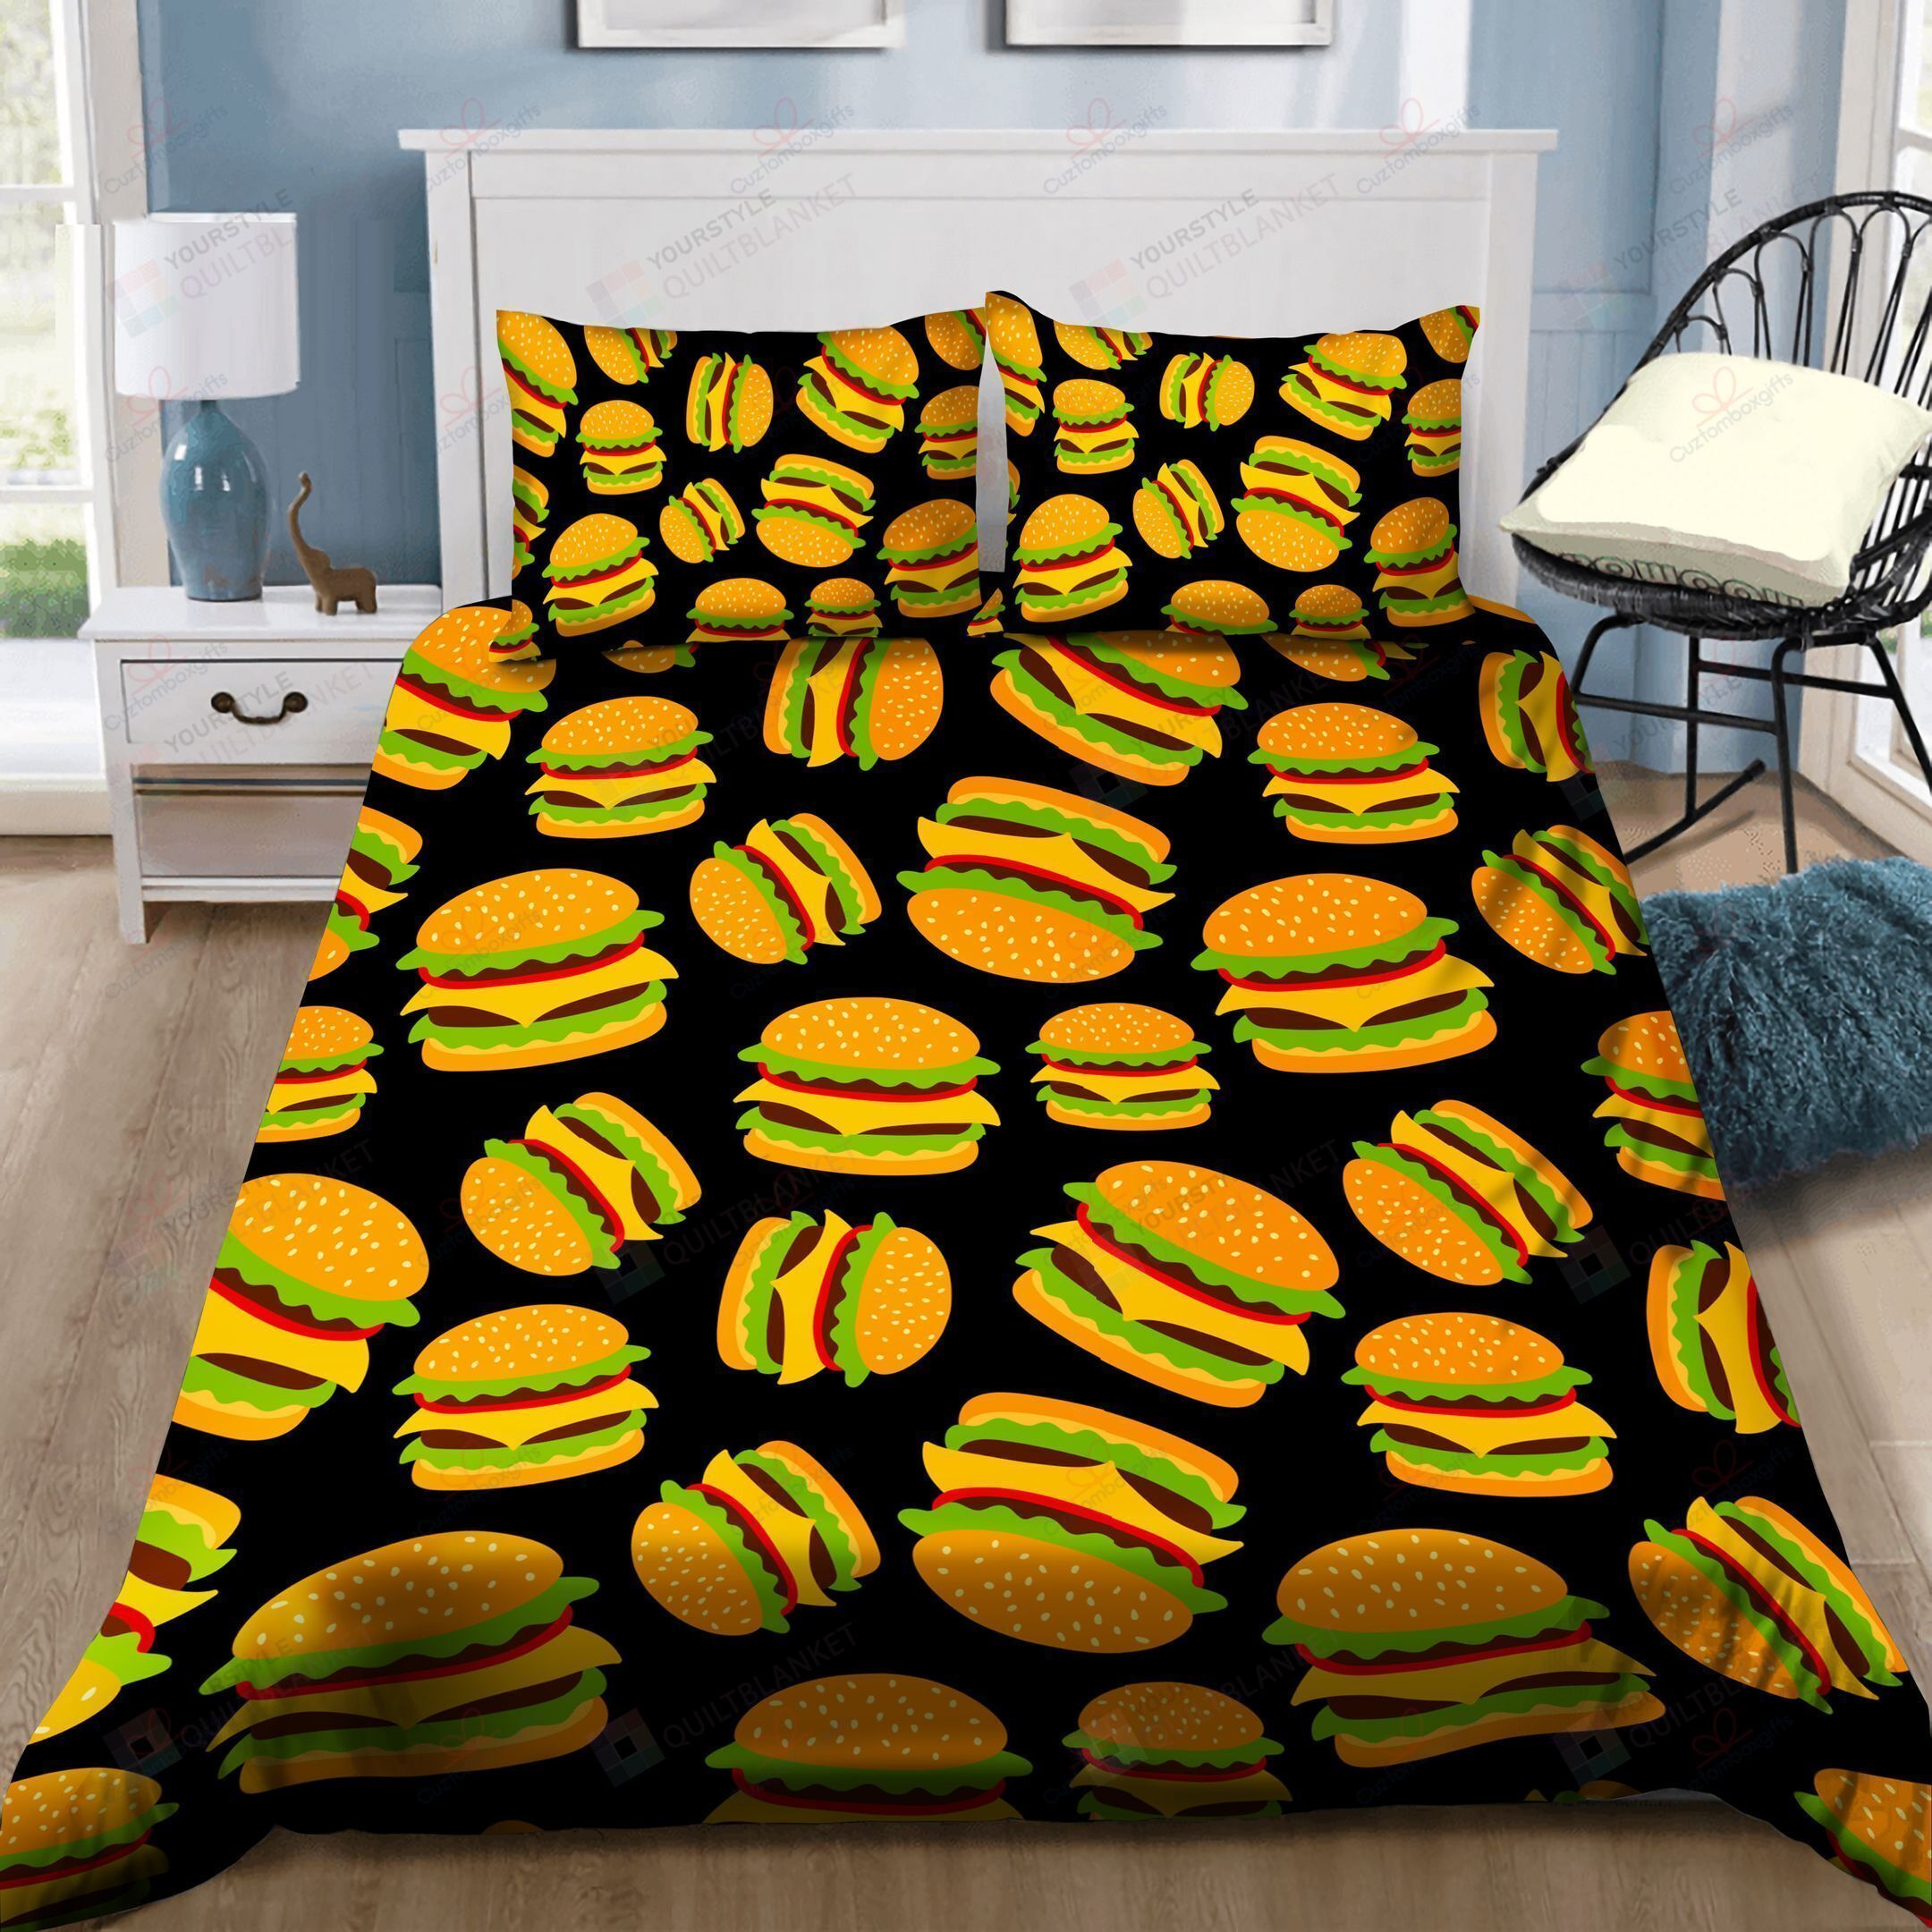 Hamburger Bedding Sets (Duvet Cover & Pillow Cases)